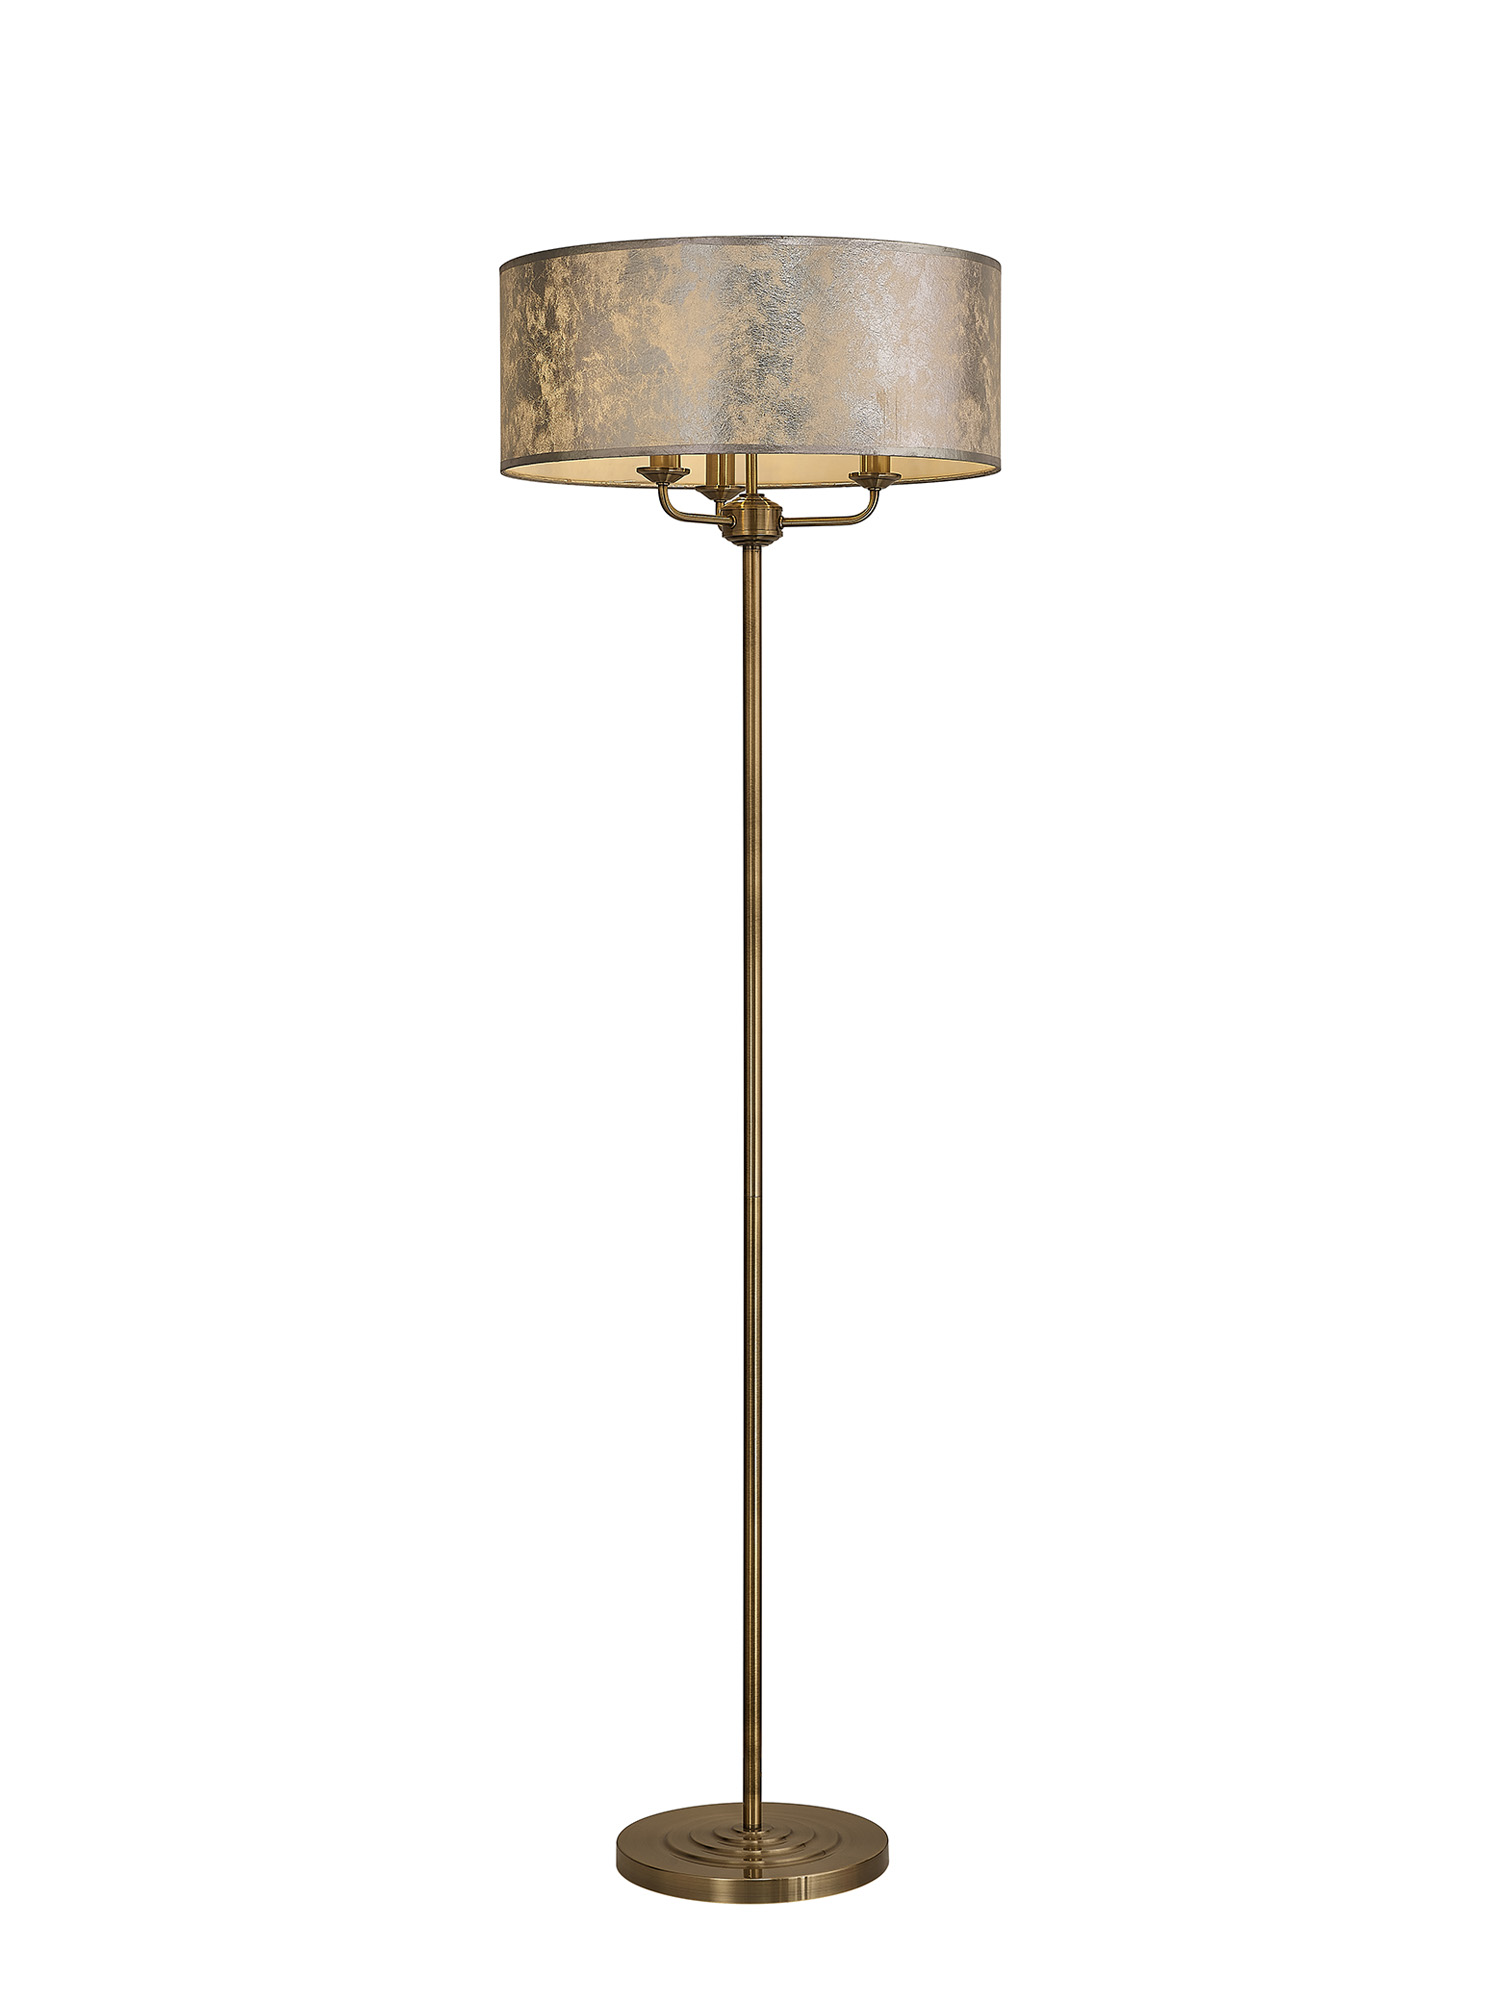 DK0920  Banyan 45cm 3 Light Floor Lamp Antique Brass, Silver Leaf